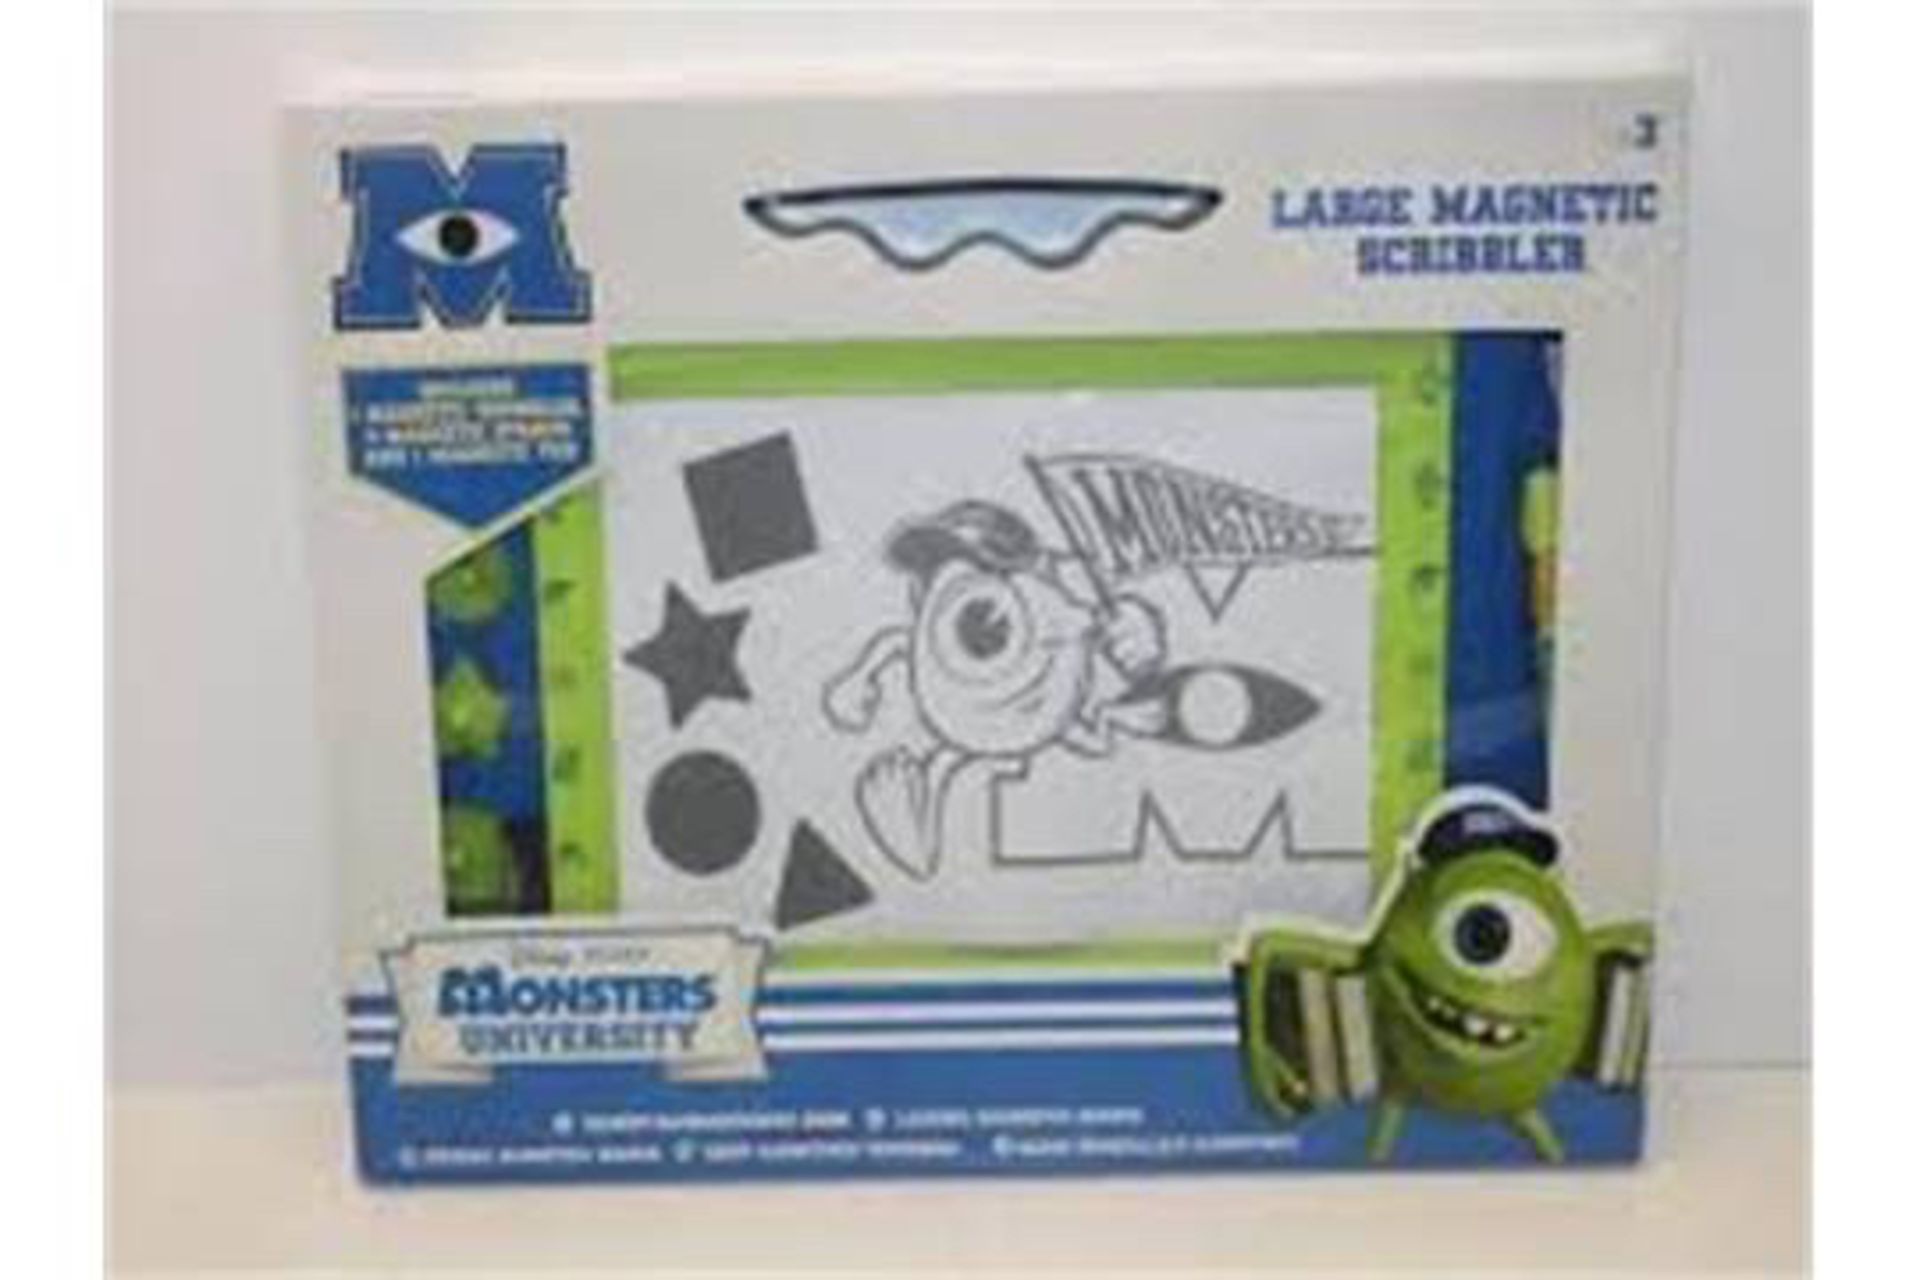 2 x Monsters university Large Magnetic Scribbler. Includes: 1 x Magnetic scribbler, 4 Magnetic